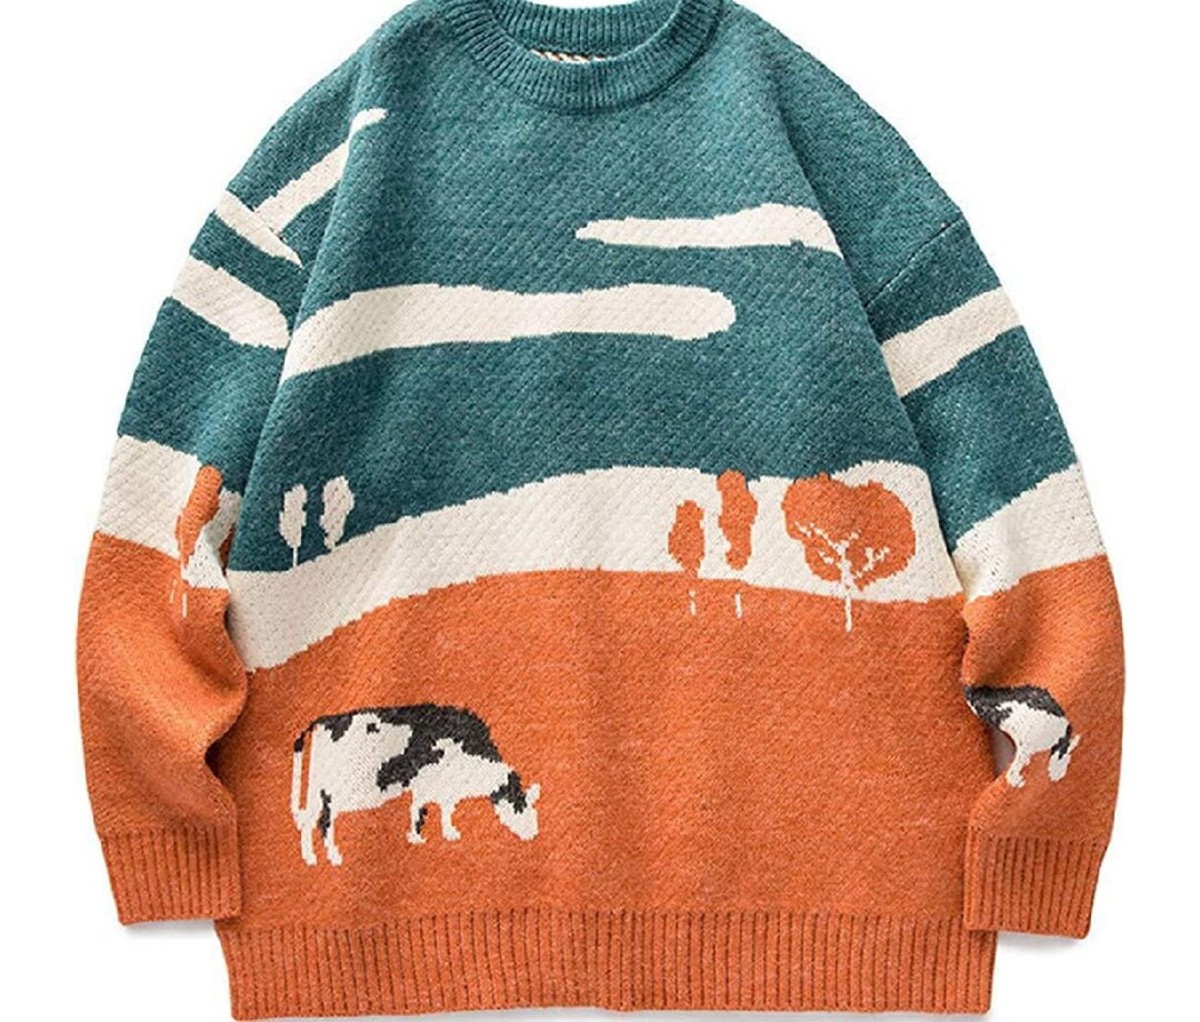 Orange and teal, pictorial Vamtac Men’s Grassland Cow Vintage Oversize Knitted Sweater